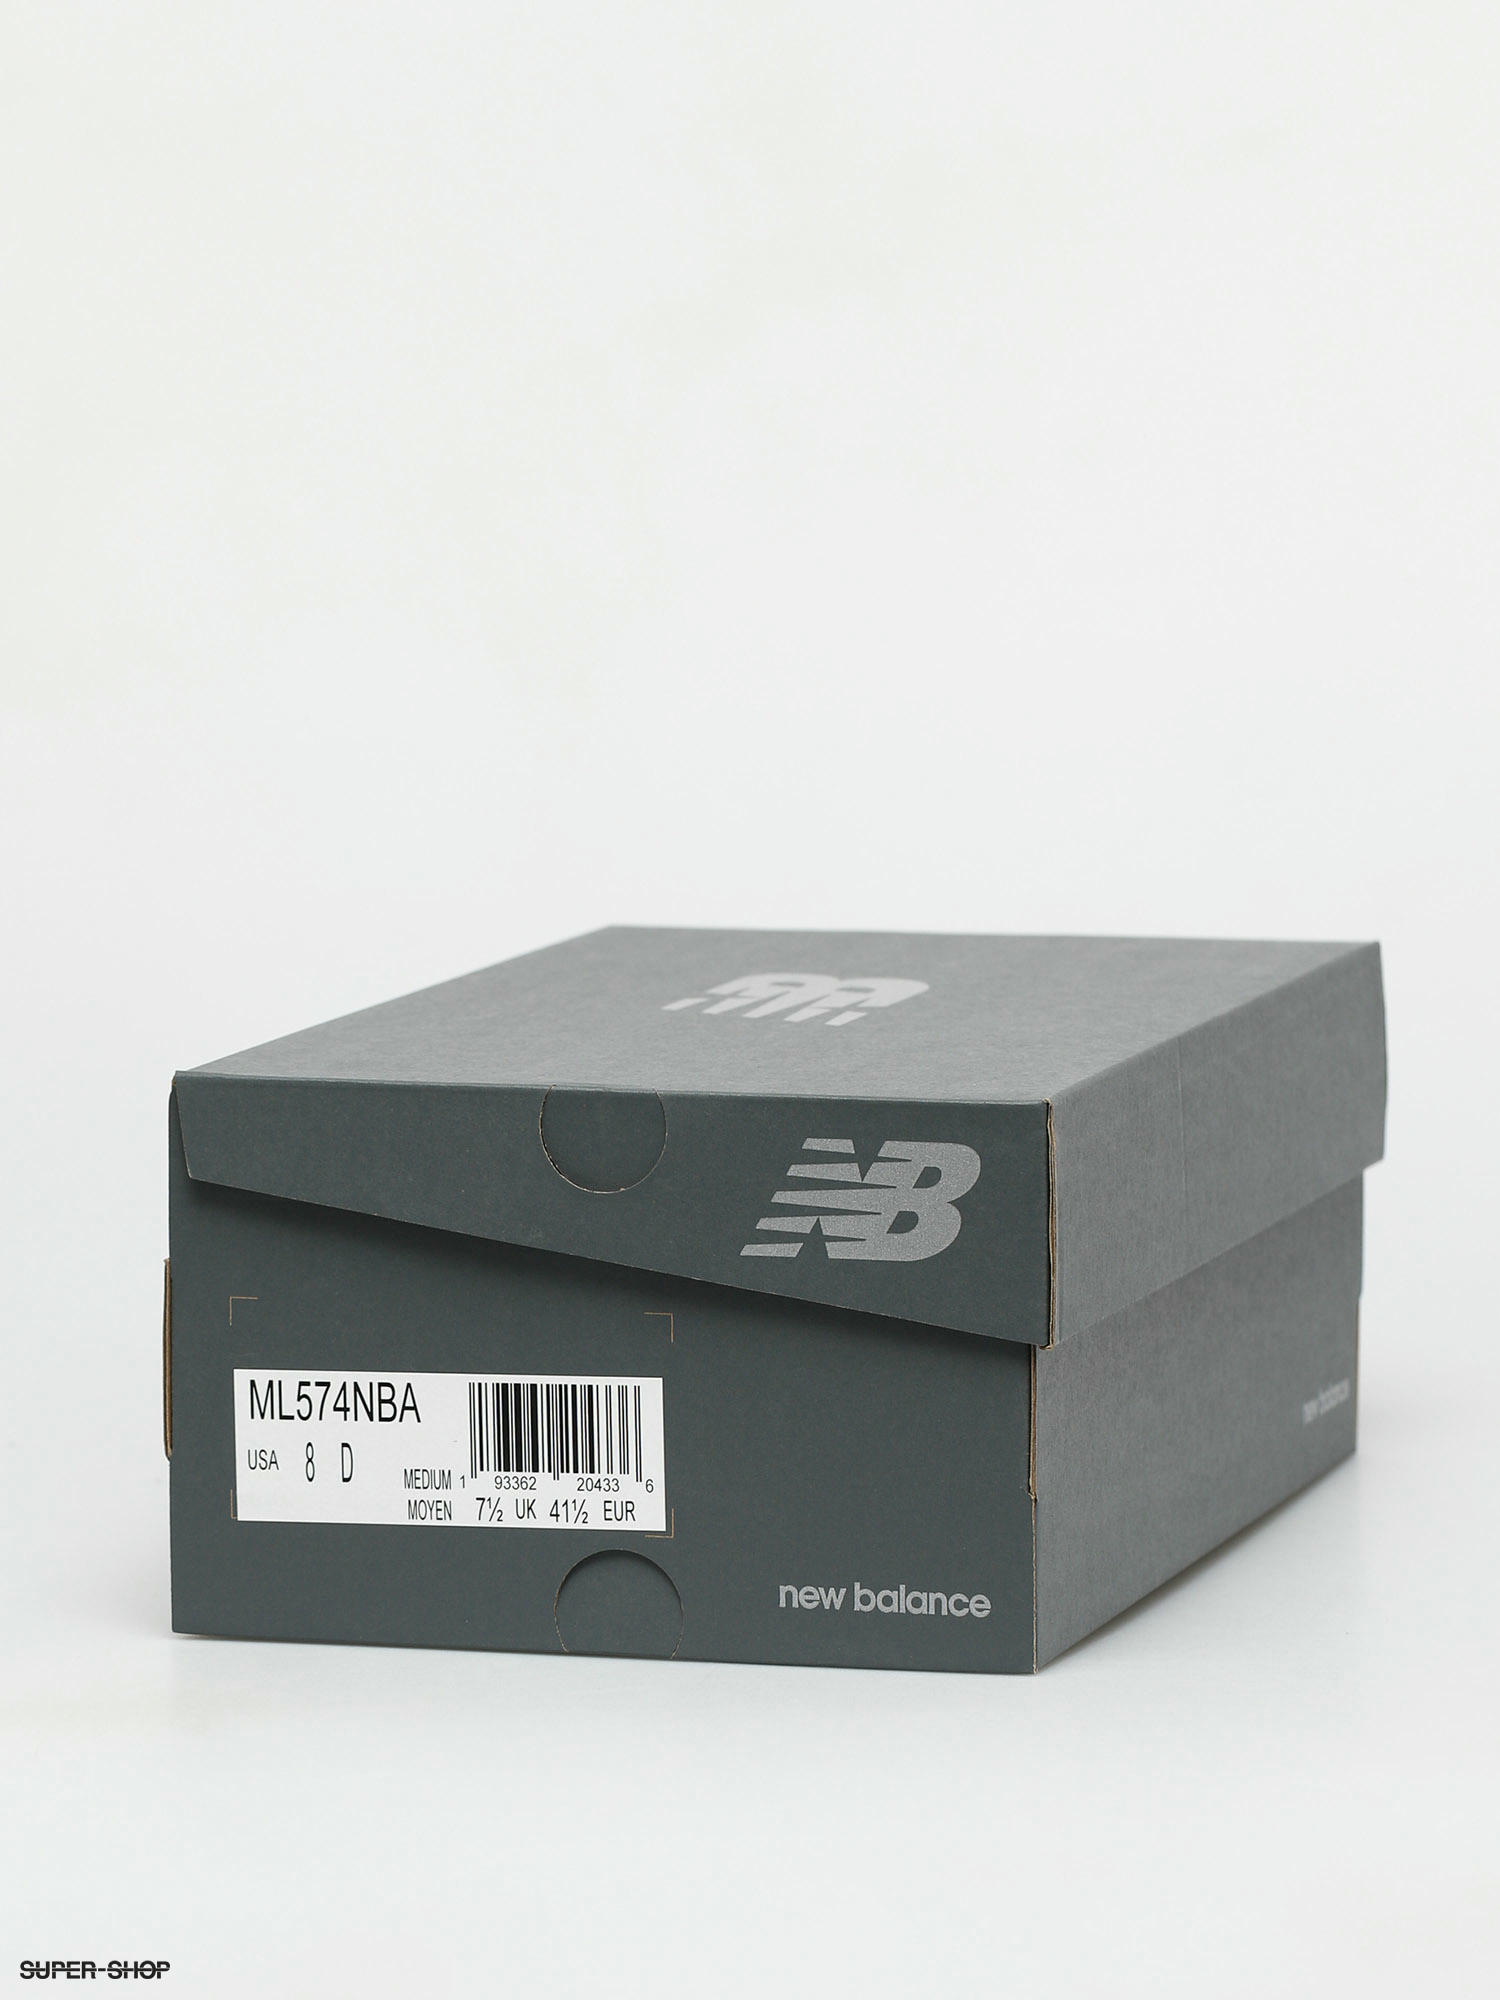 New Balance 574 Shoes (grey)